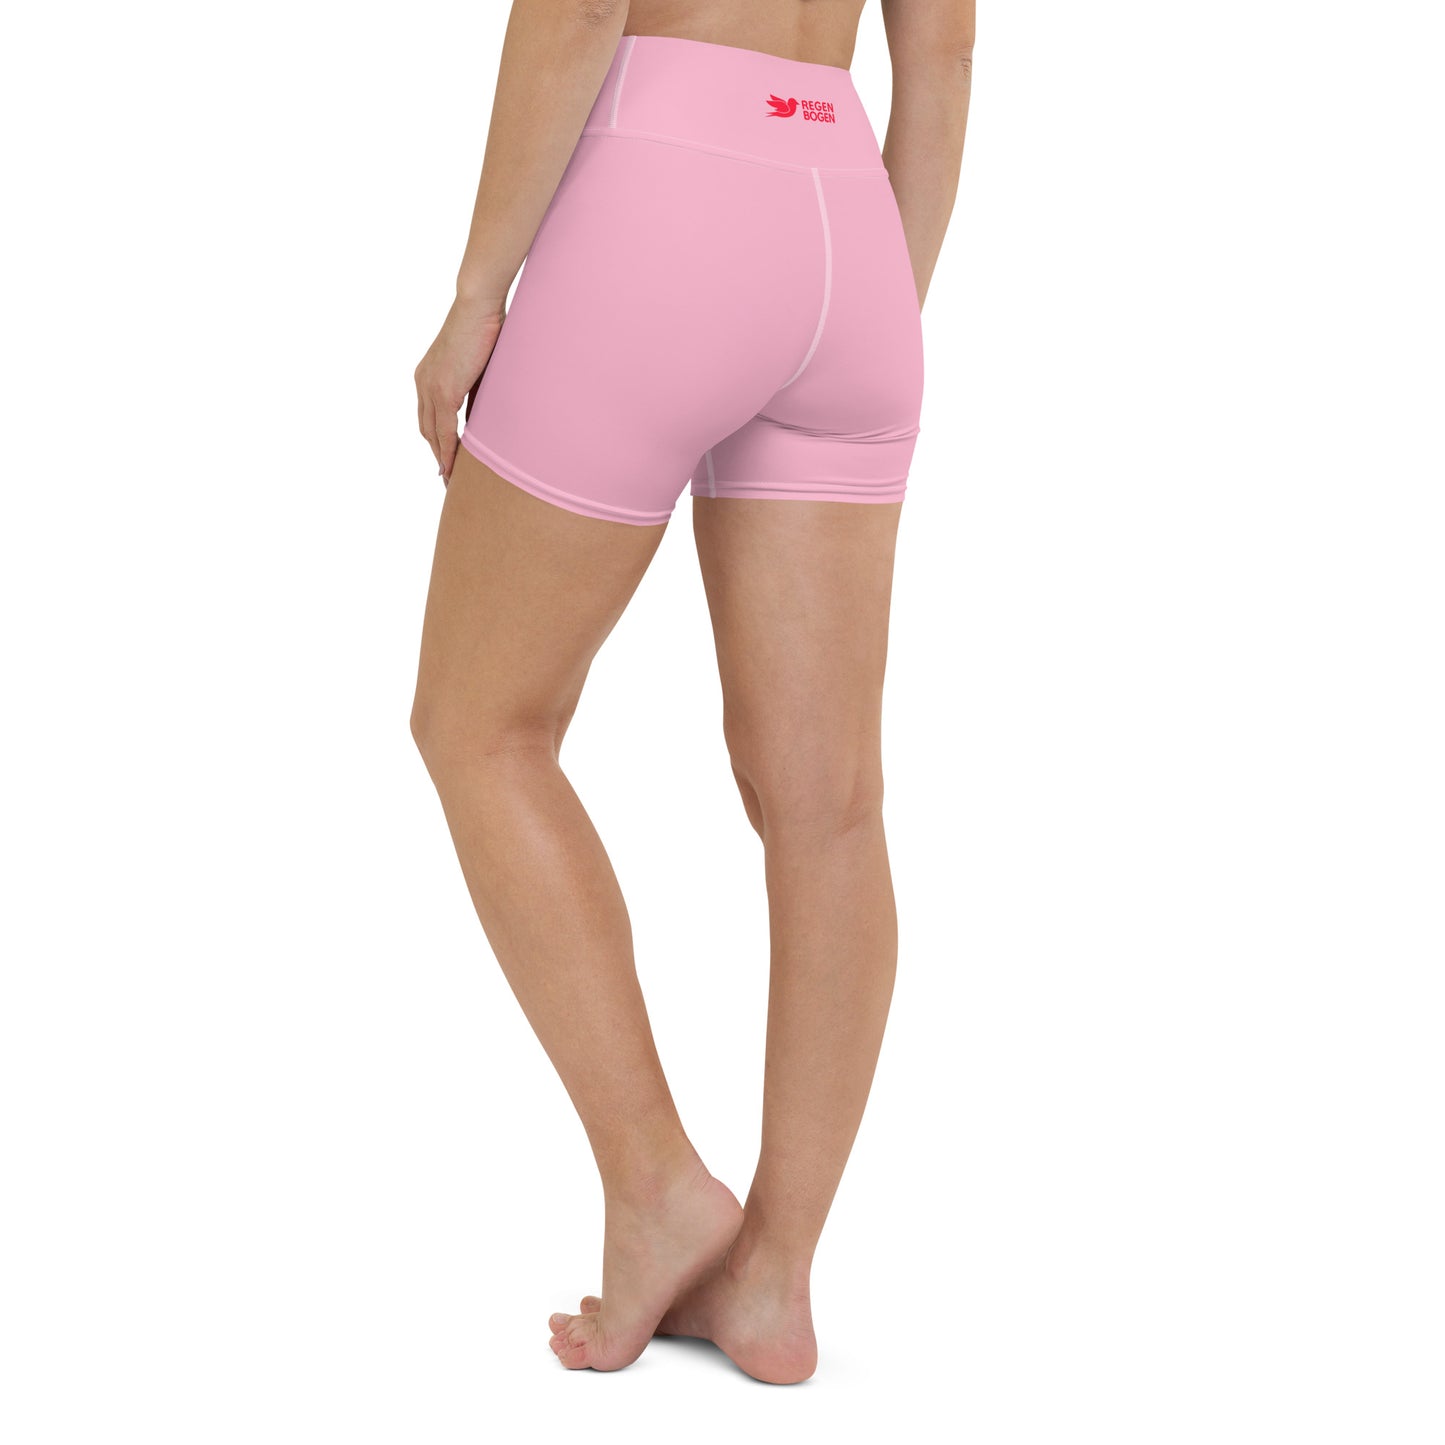 Garten Solid Pink High Waist Yoga Shorts / Bike Shorts with Inside Pocket